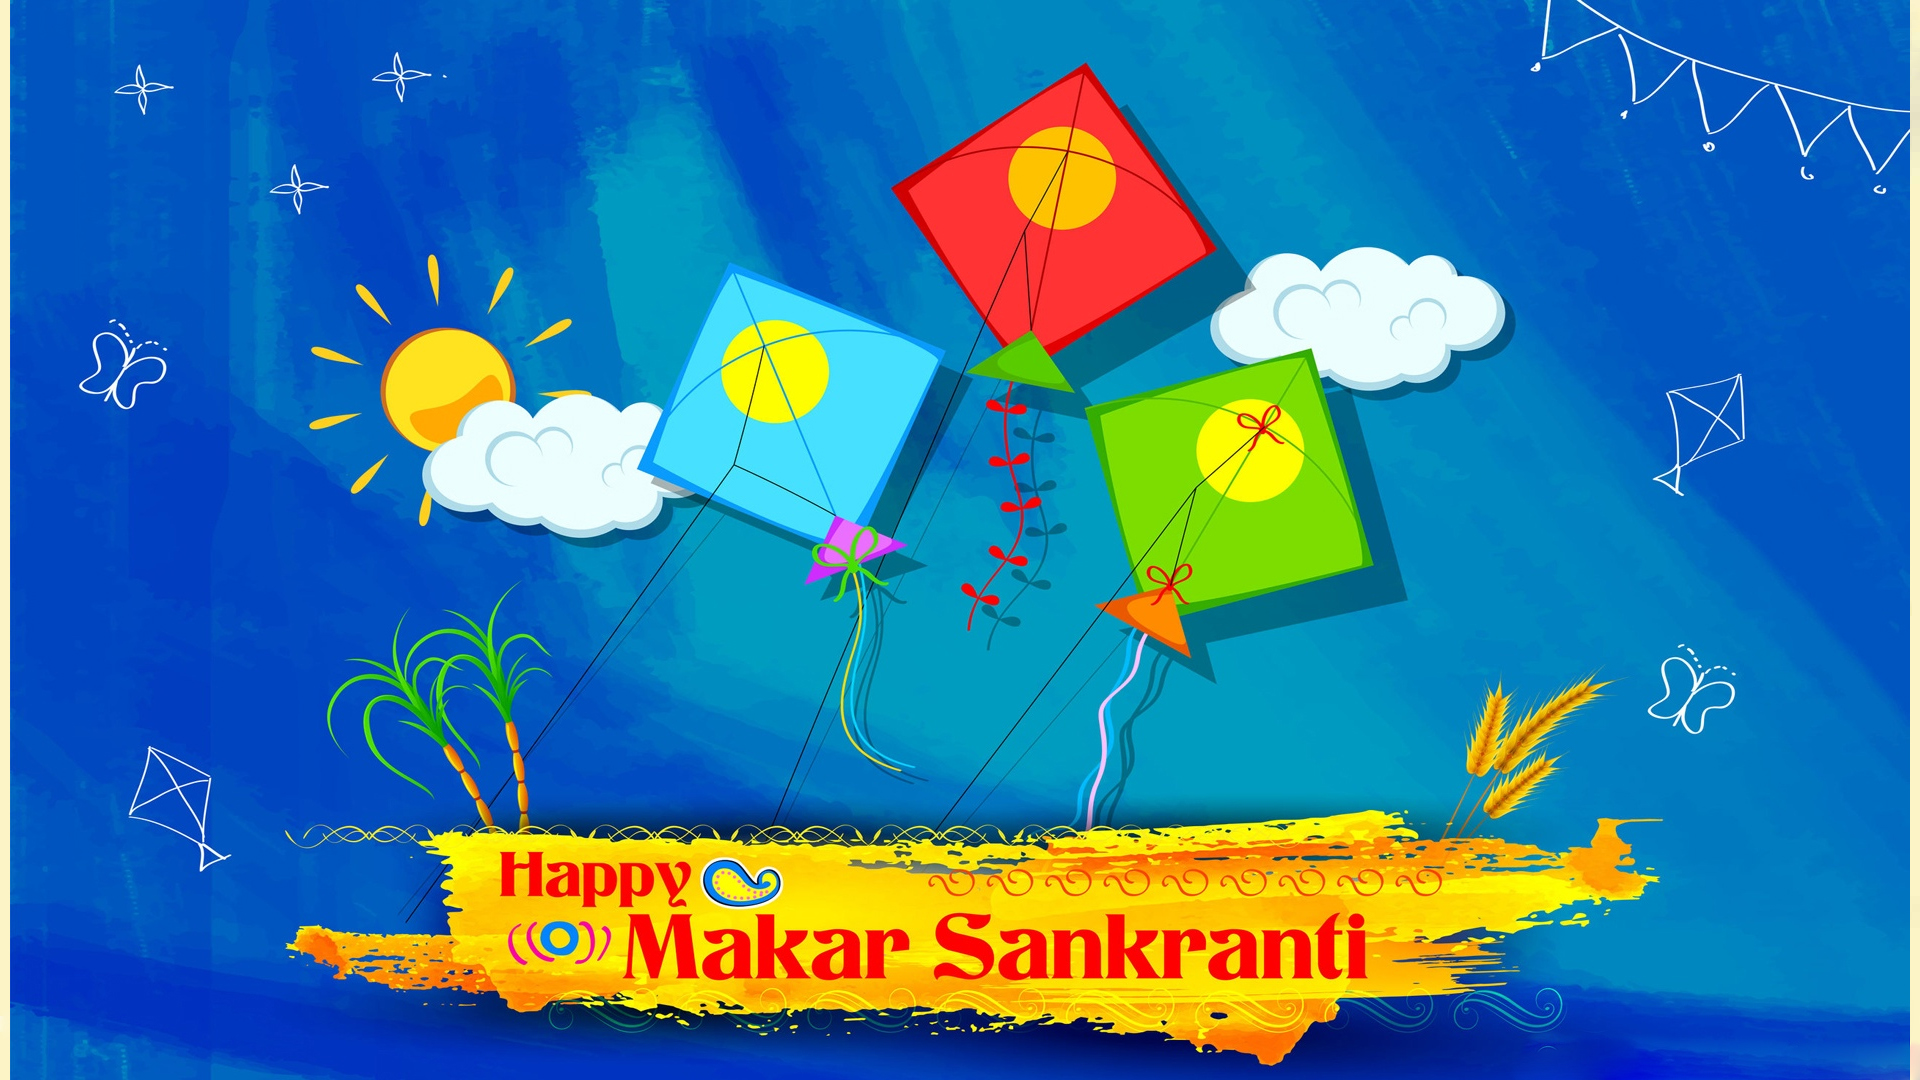 Happy Makar Sankranti Image For Whatsapp Dp